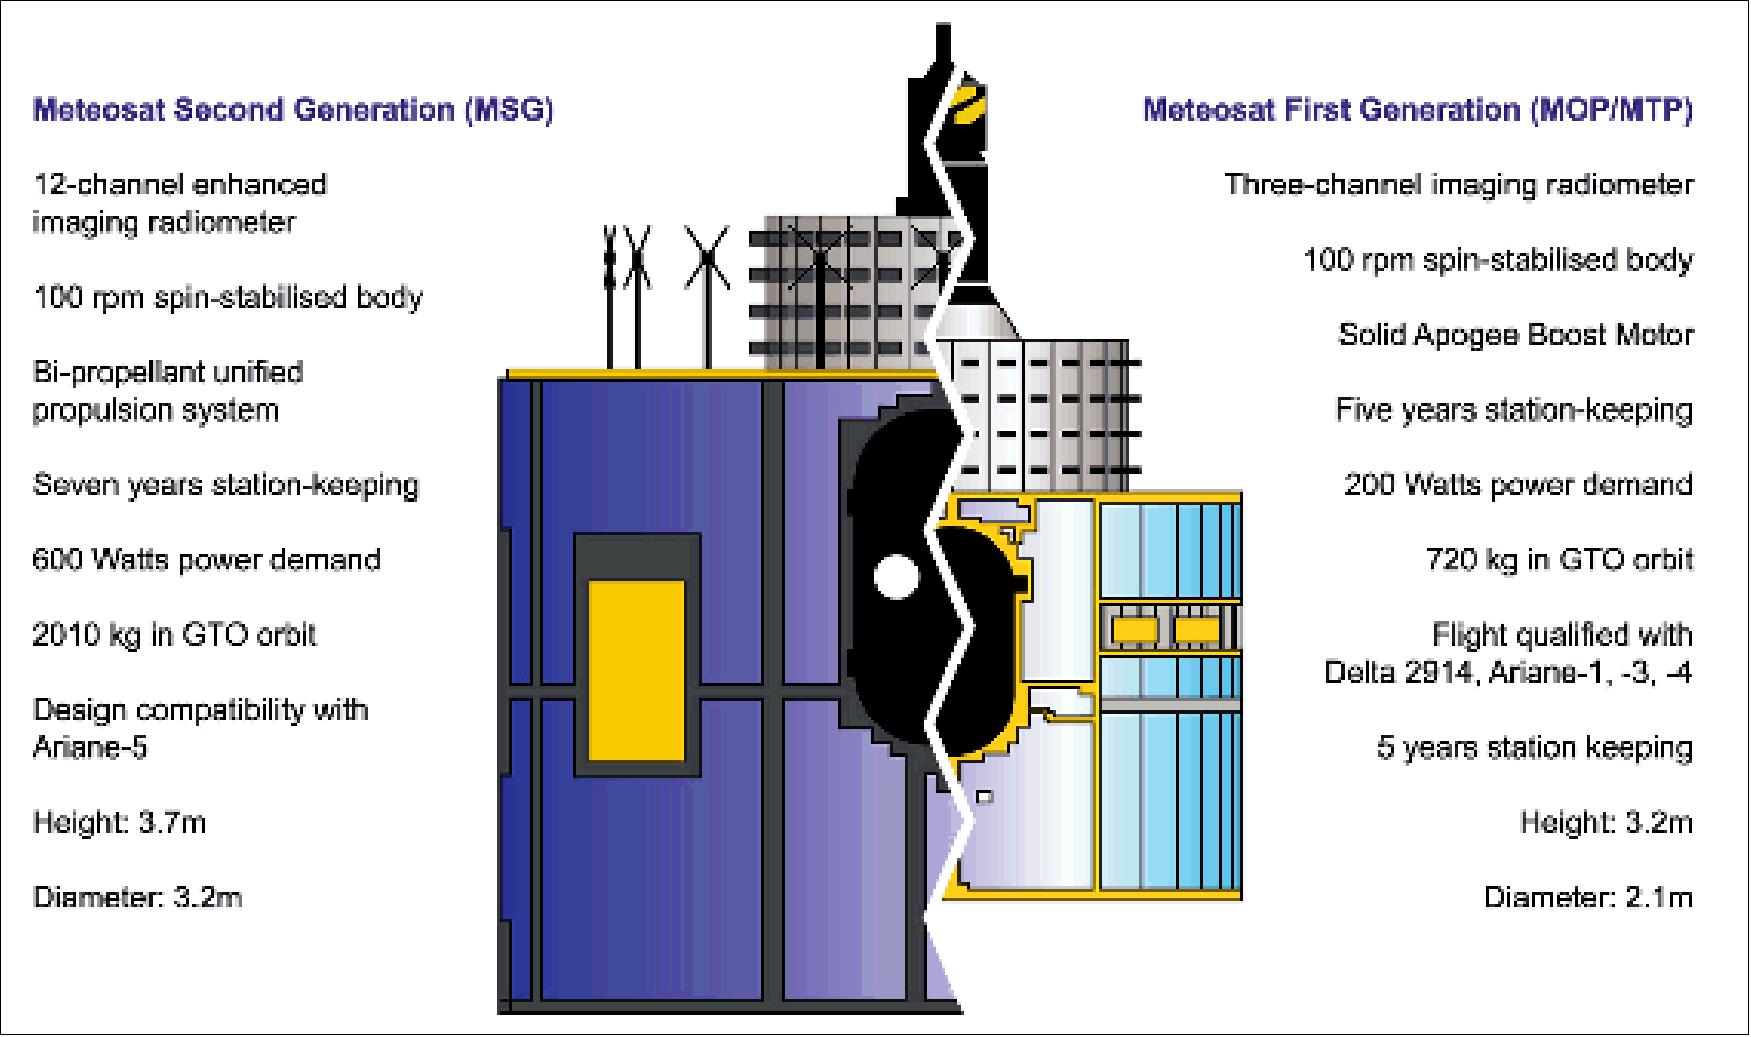 Figure 21: Comparison of first and second generation Meteosat spacecraft (image credit: EUMETSAT)